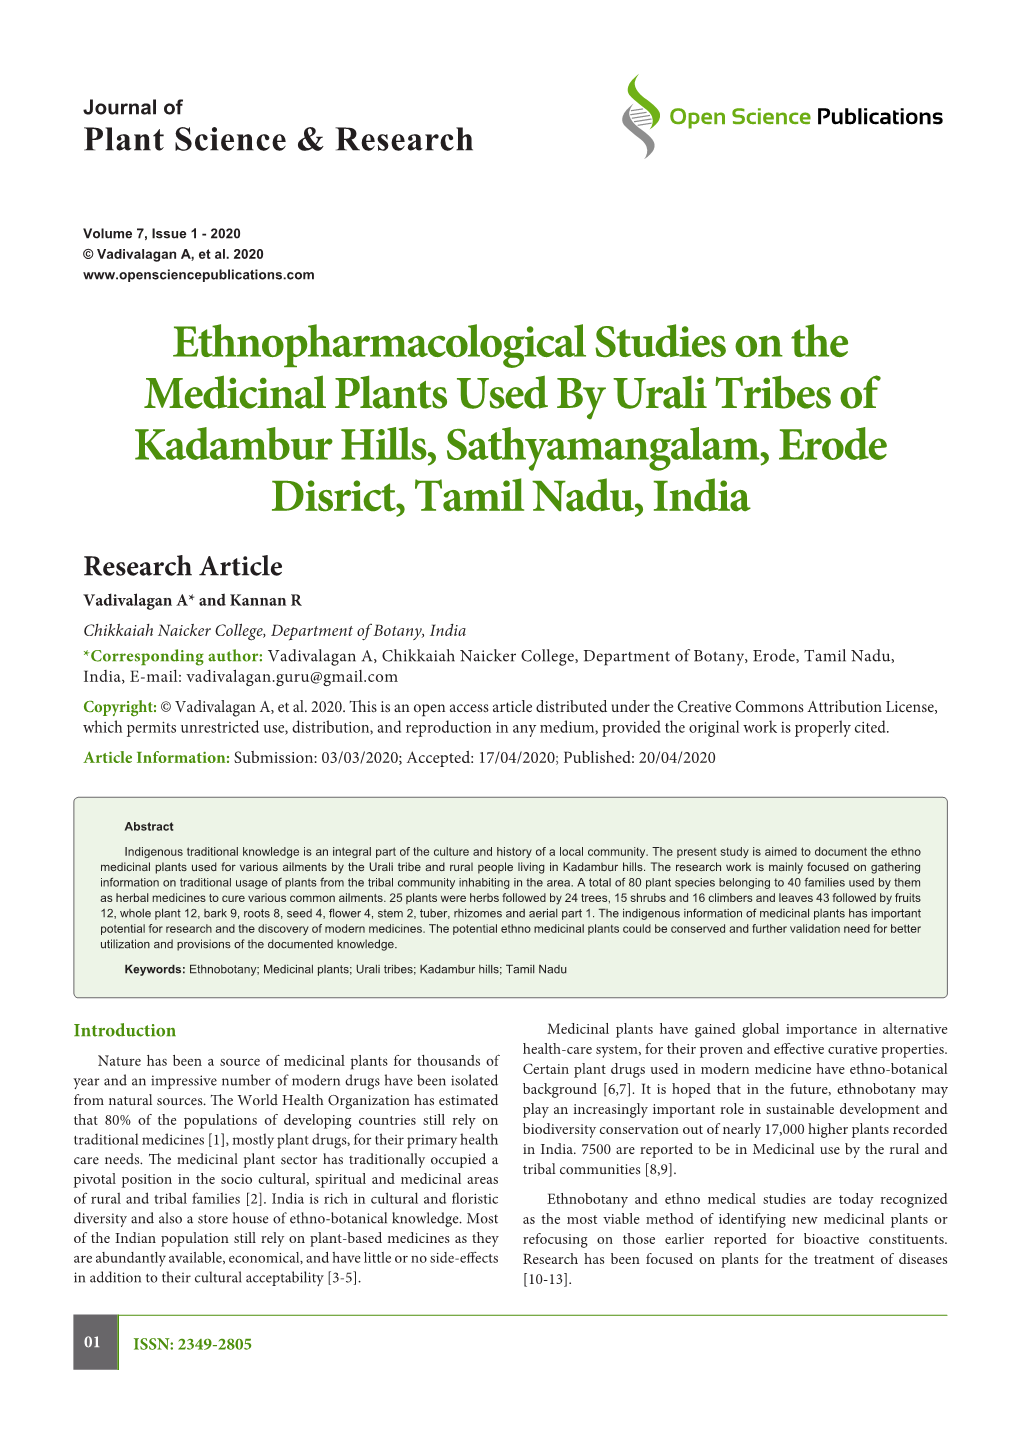 Ethnopharmacological Studies on the Medicinal Plants Used by Urali Tribes of Kadambur Hills, Sathyamangalam, Erode Disrict, Tamil Nadu, India